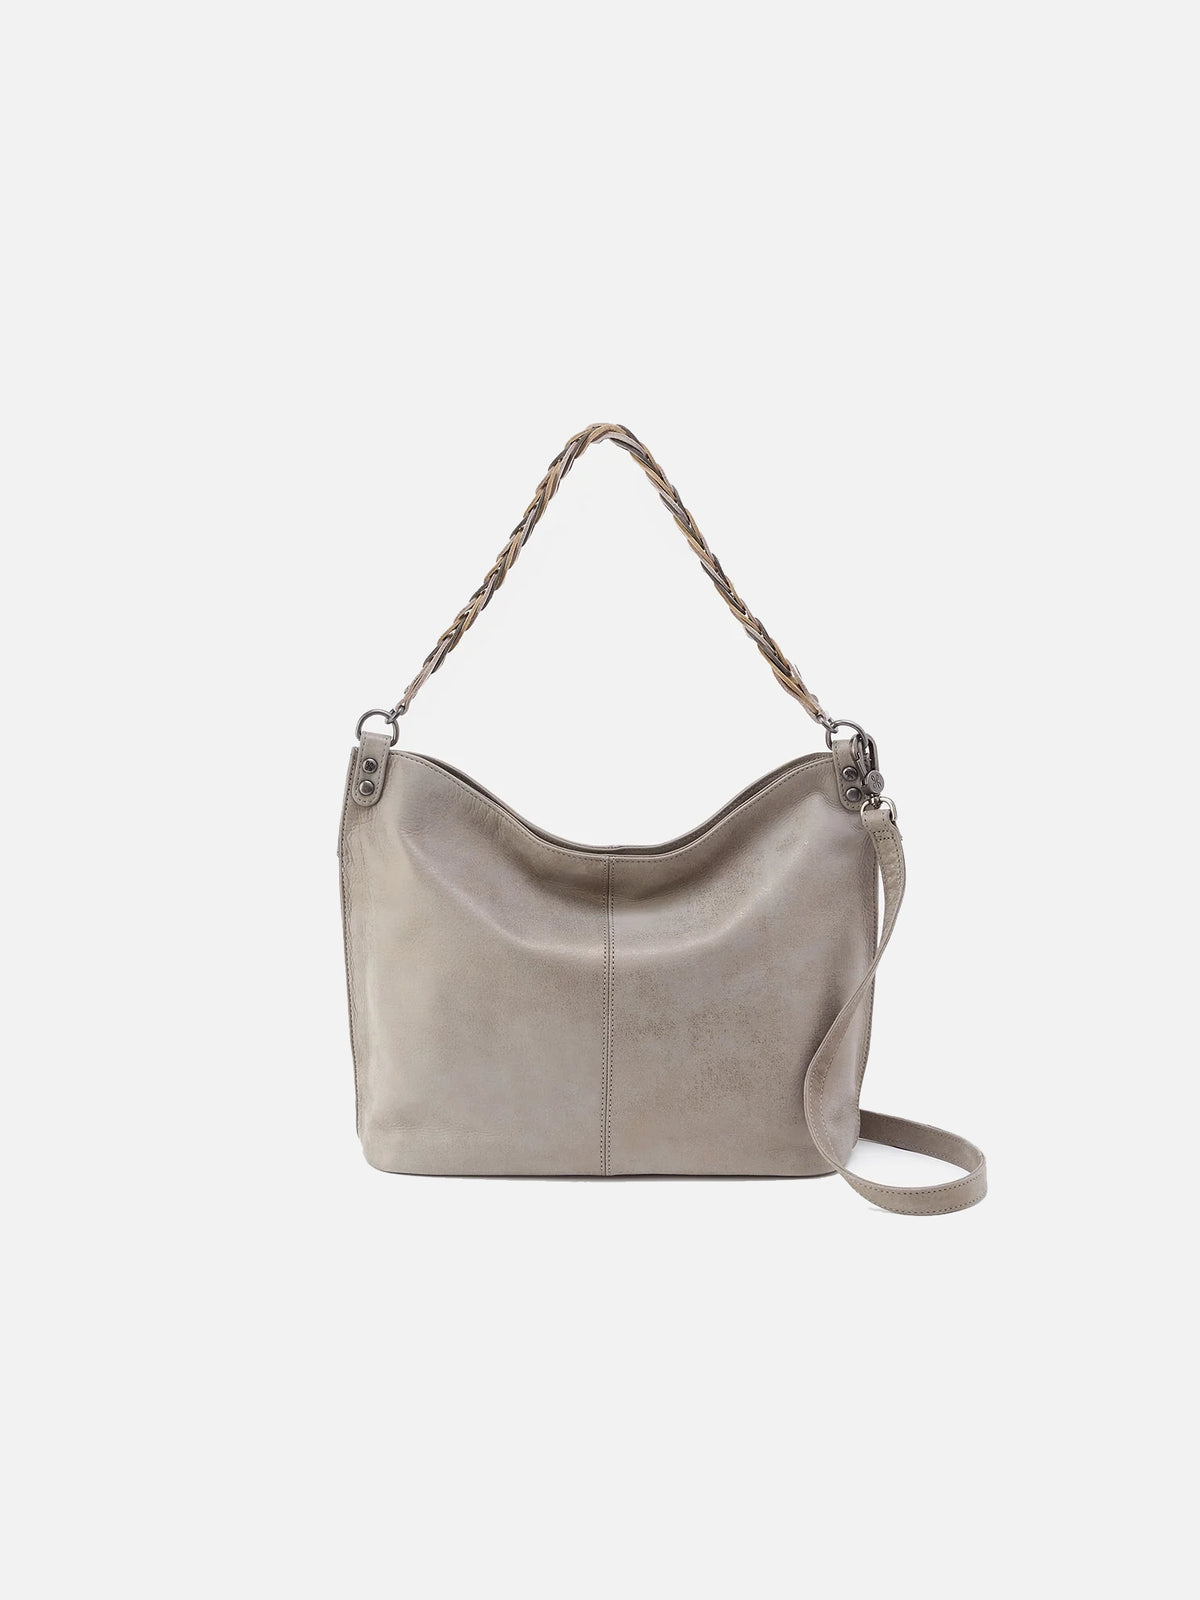 hobo pier shoulder bag in granite grey metallic leather